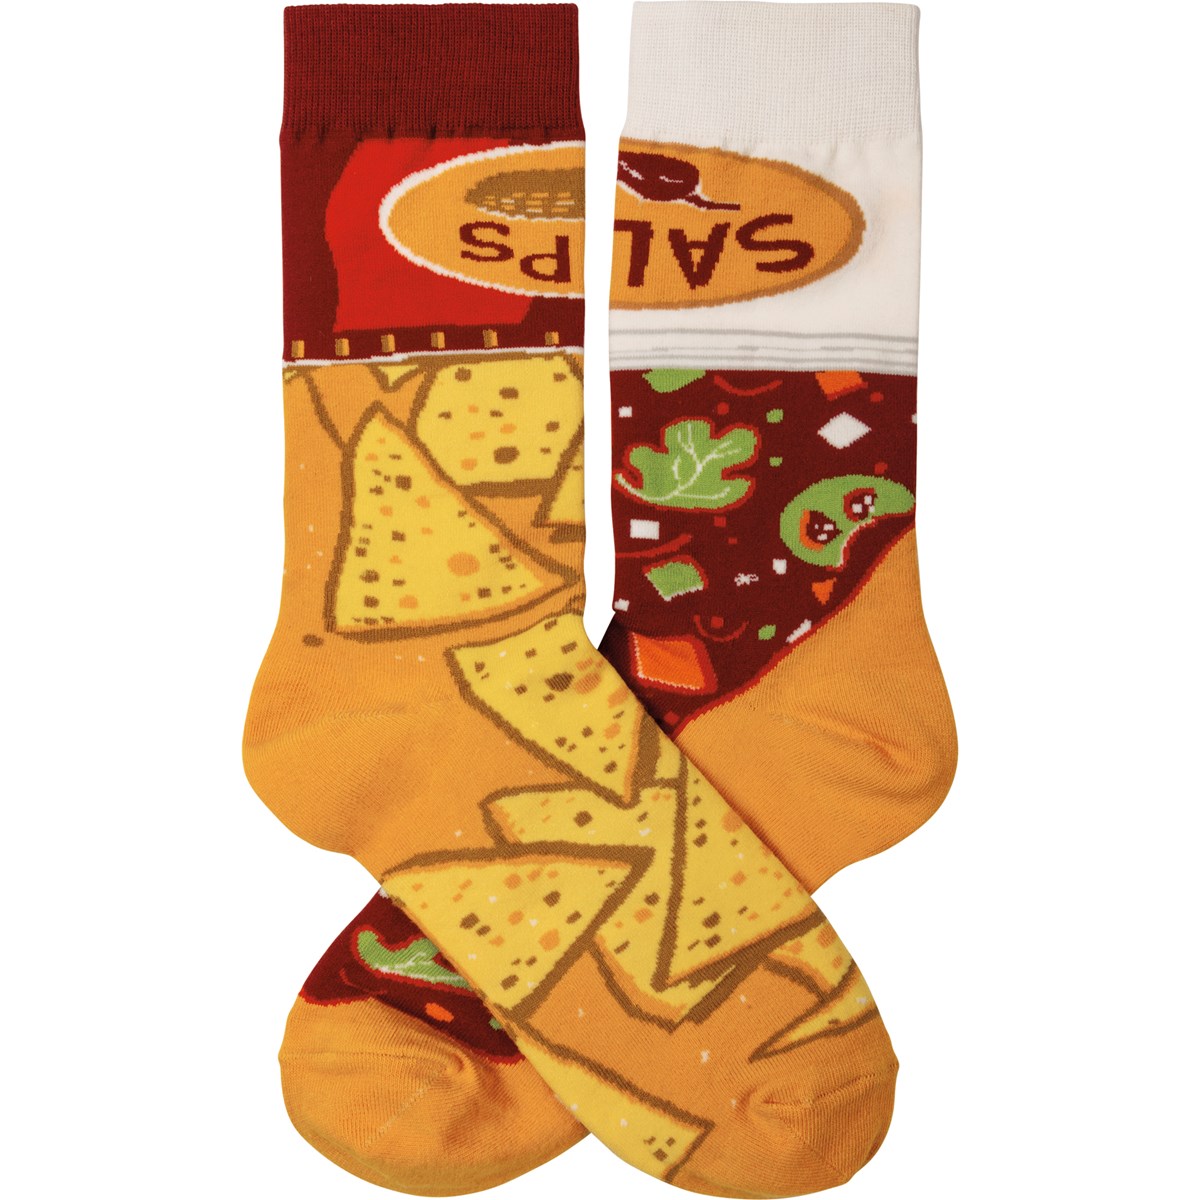 Socks - Chips & Salsa - One Size Fits Most - Cotton, Nylon, Spandex